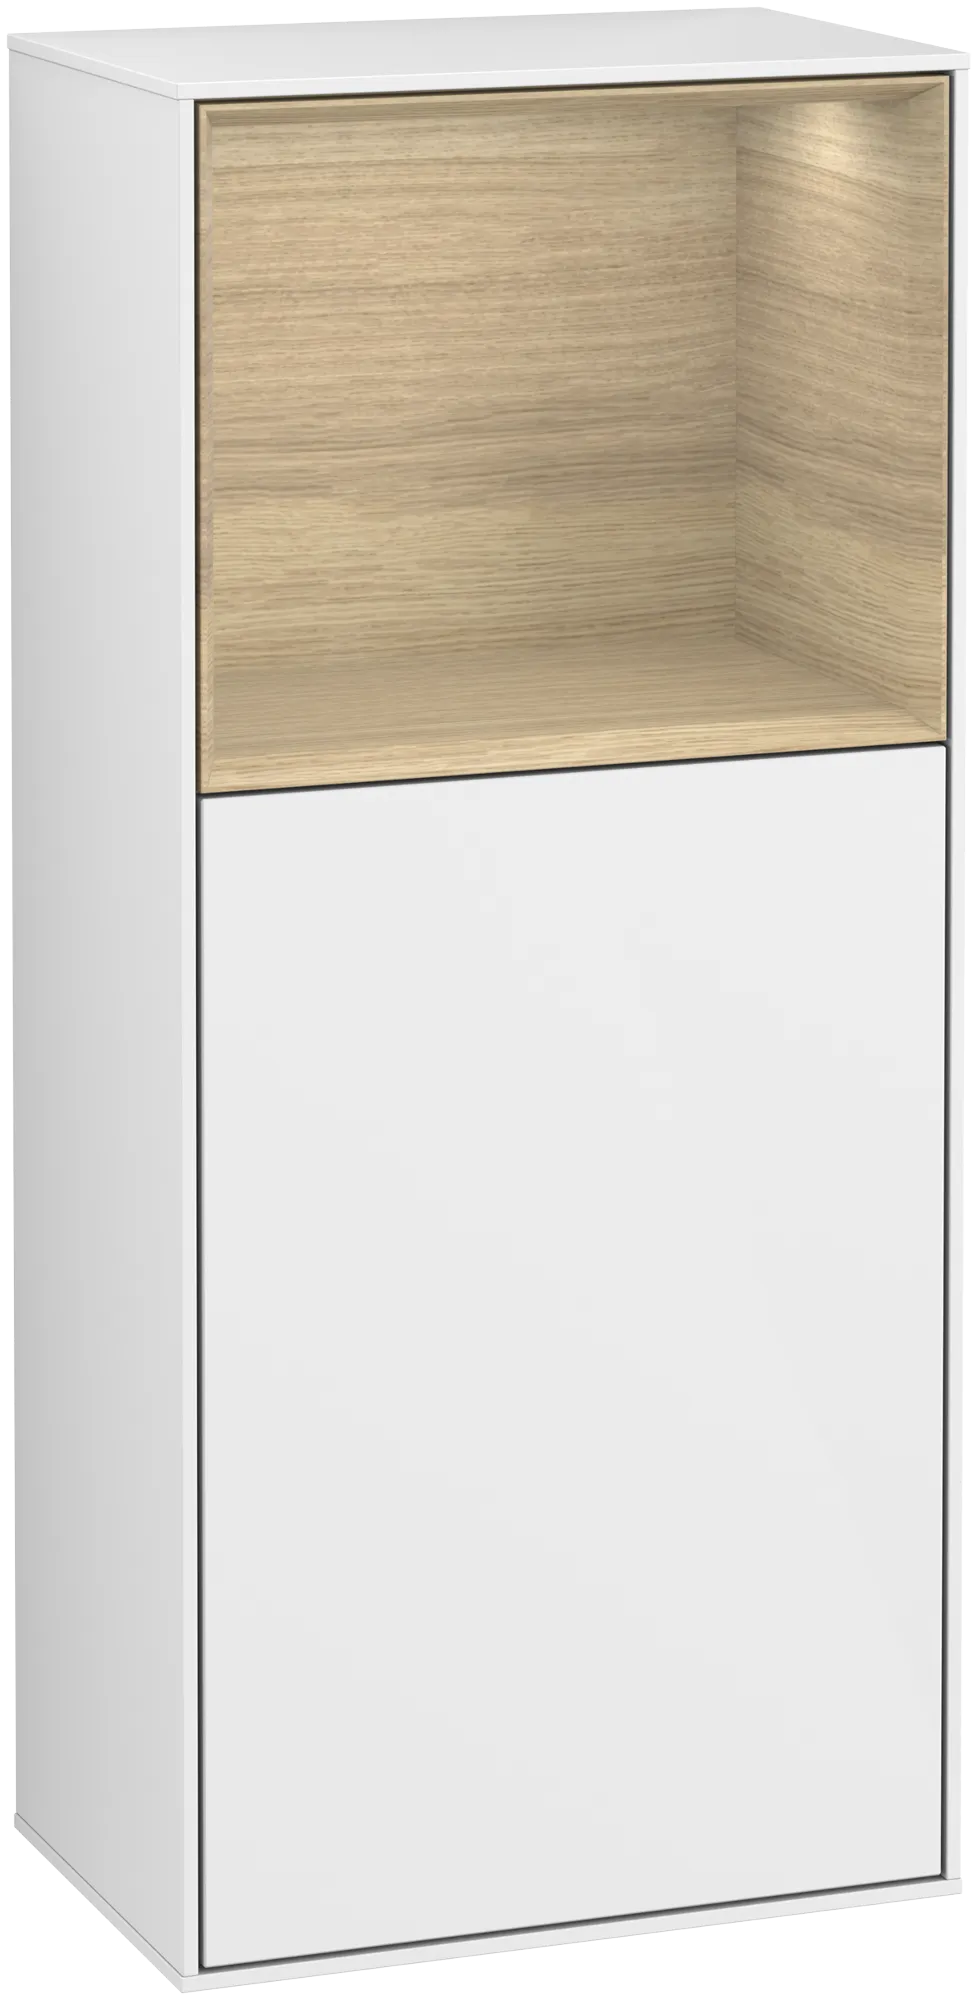 VILLEROY BOCH Finion Side cabinet, with lighting, 1 door, 418 x 936 x 270 mm, Glossy White Lacquer / Oak Veneer #G500PCGF resmi